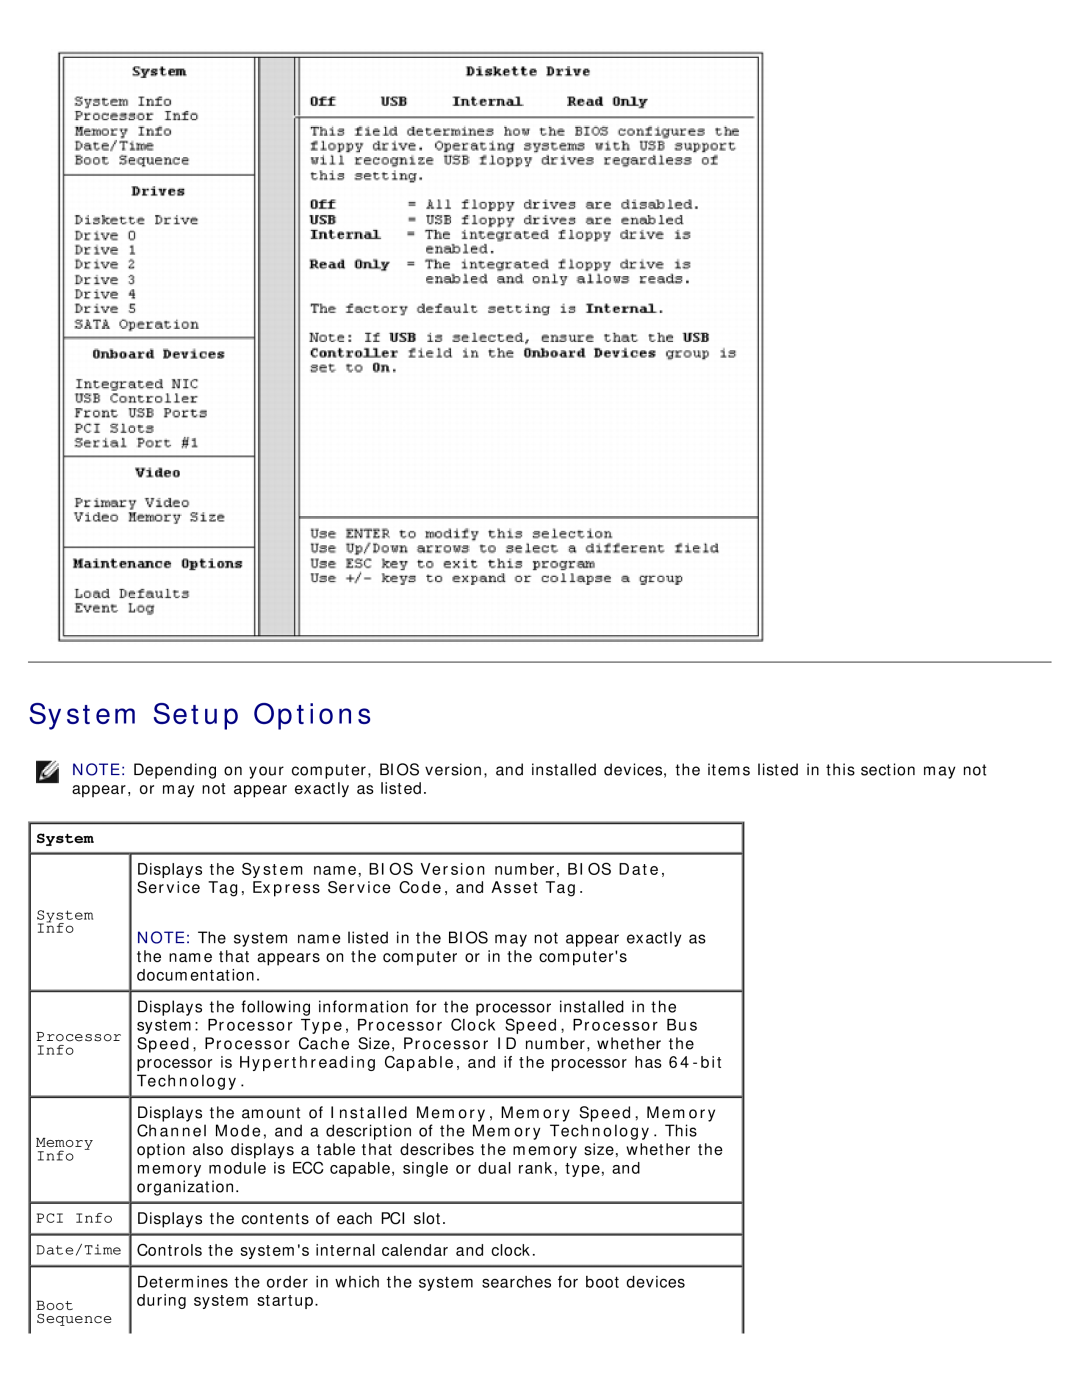 Dell DCSM manual System Setup Options 